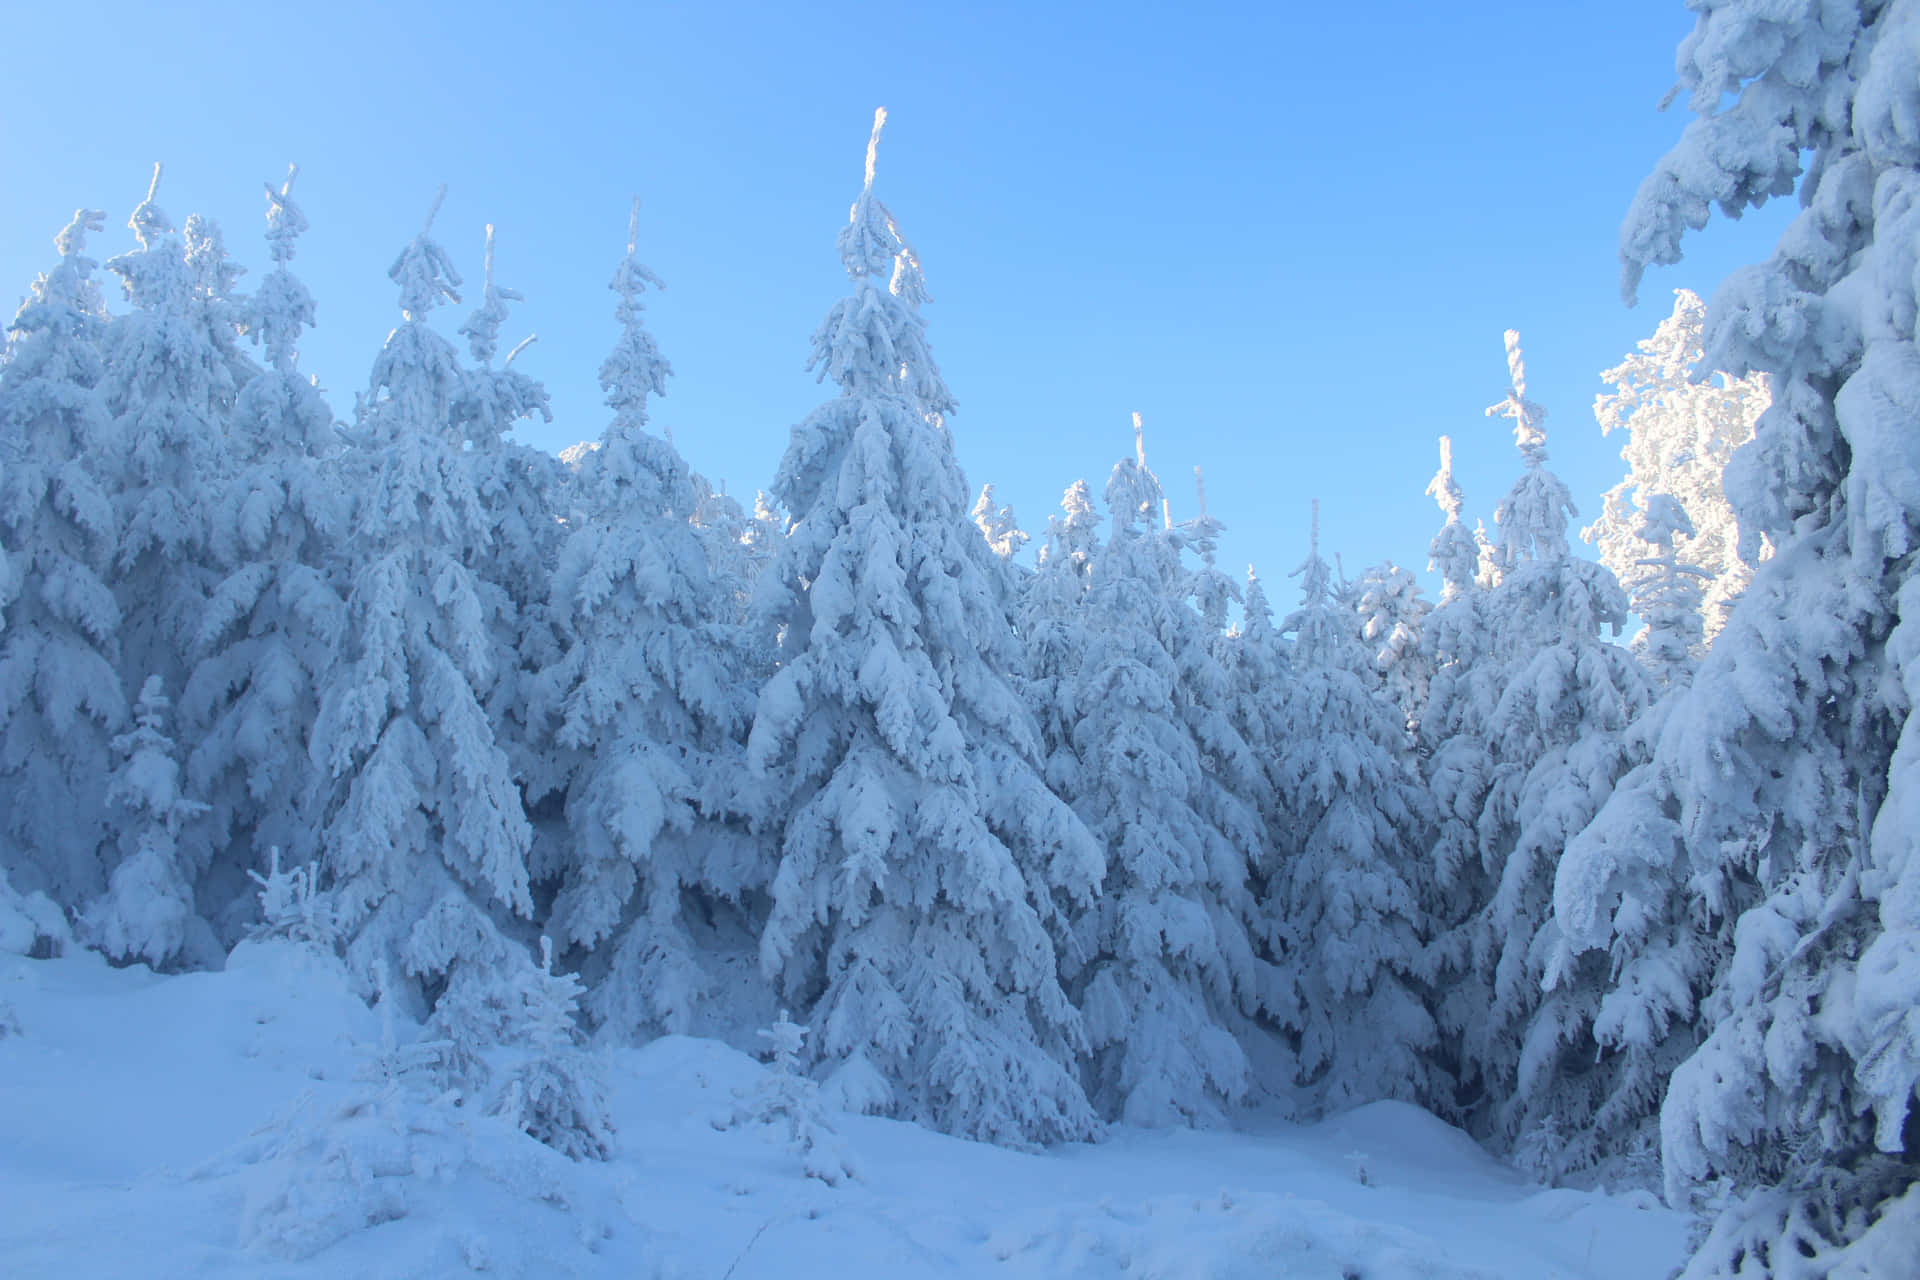 A tranquil and serene winter wonderland